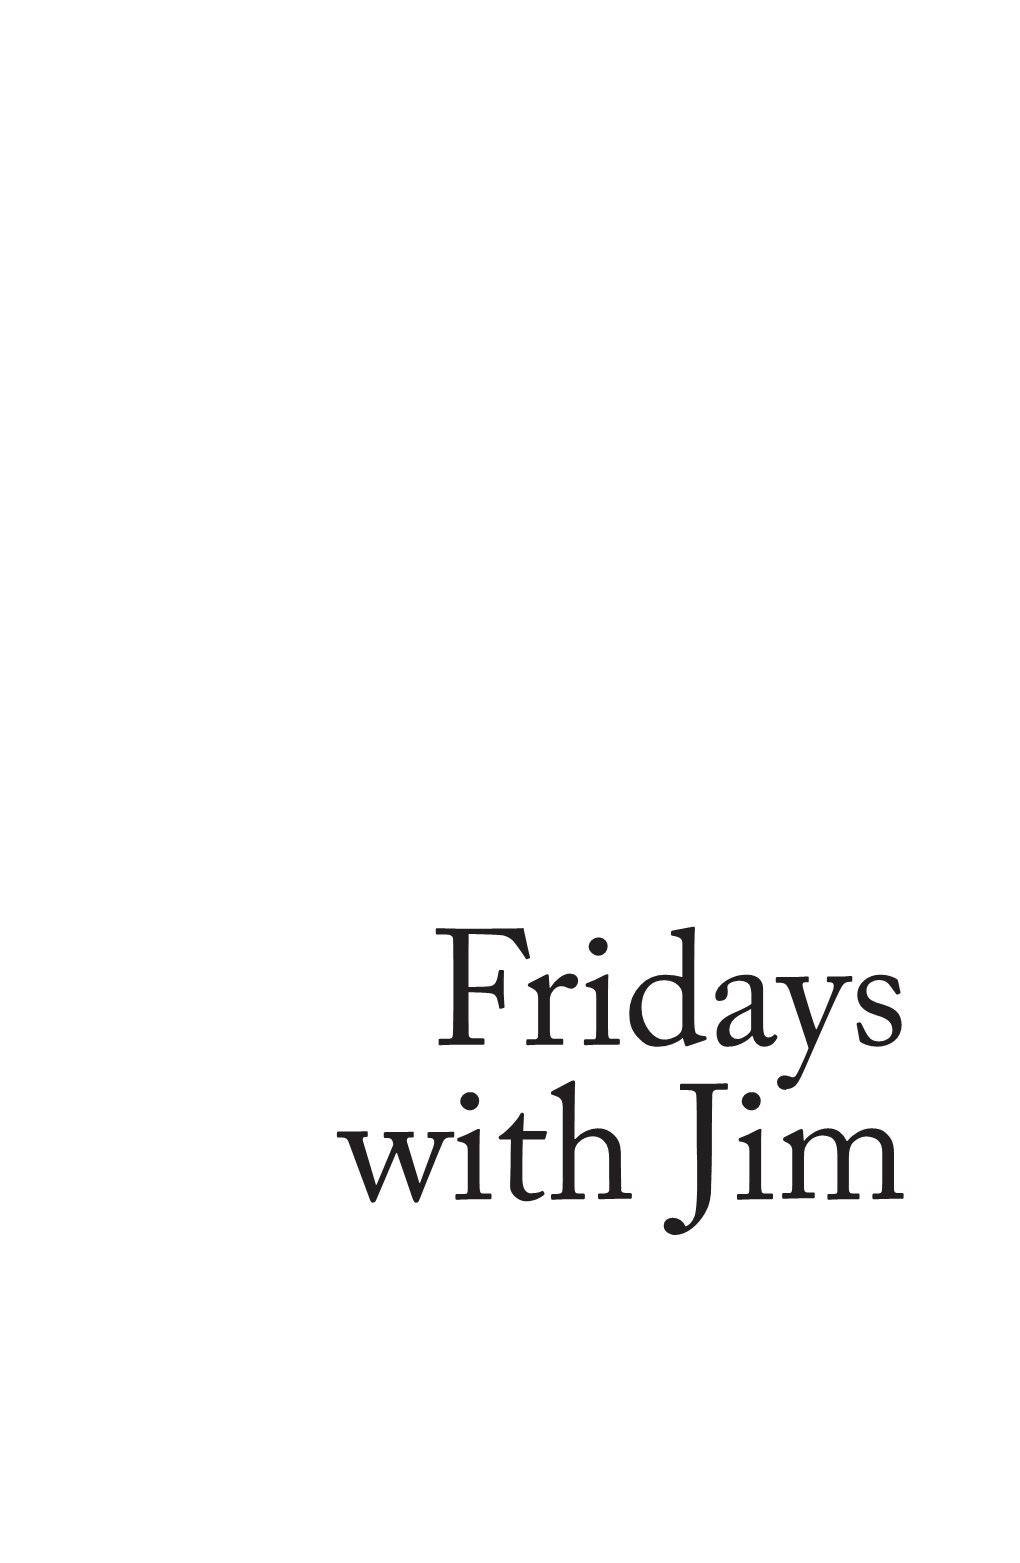 Fridays with Jim